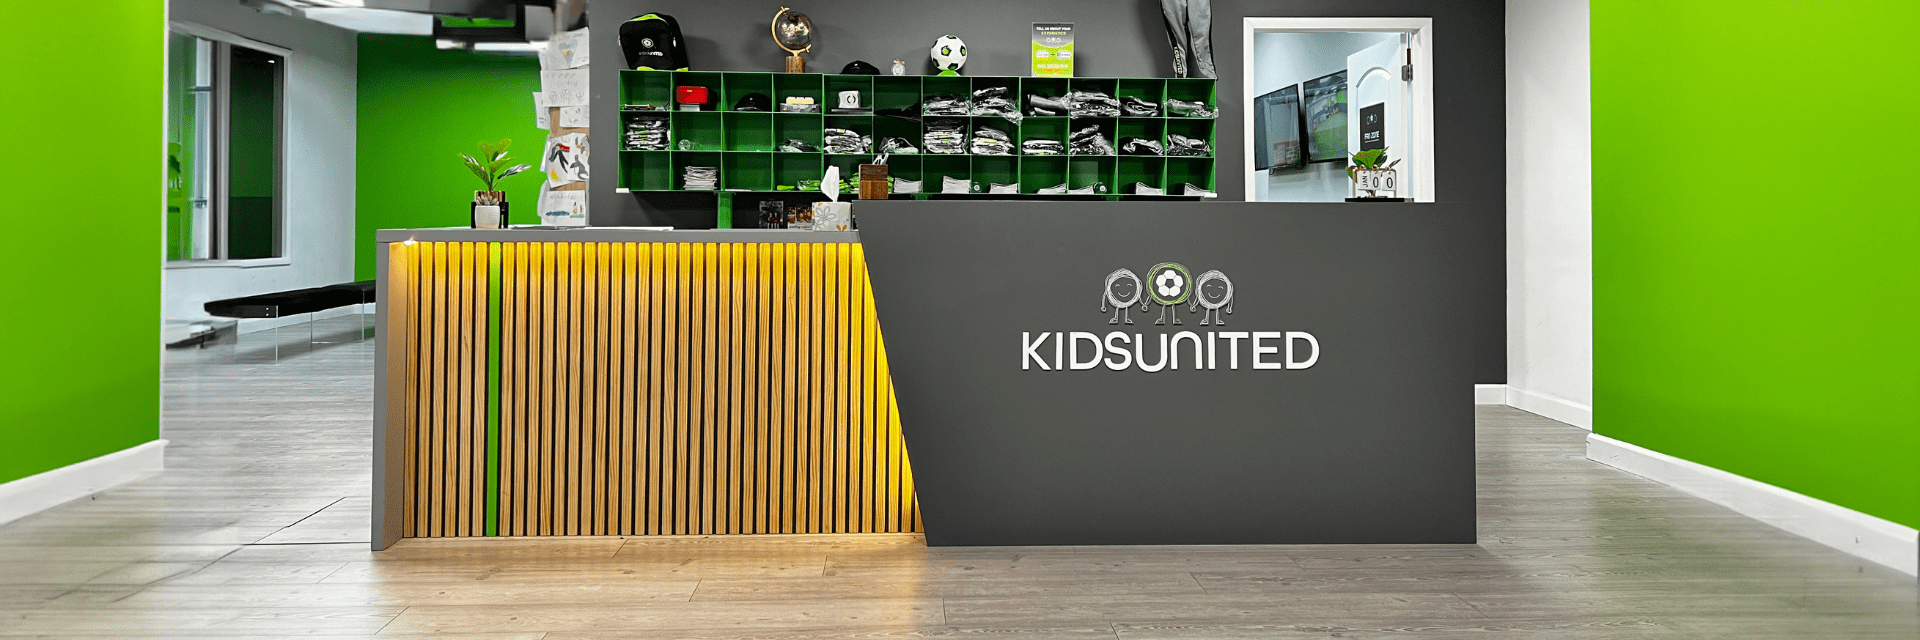 KidsUnited Soccer Franchise Reception Area